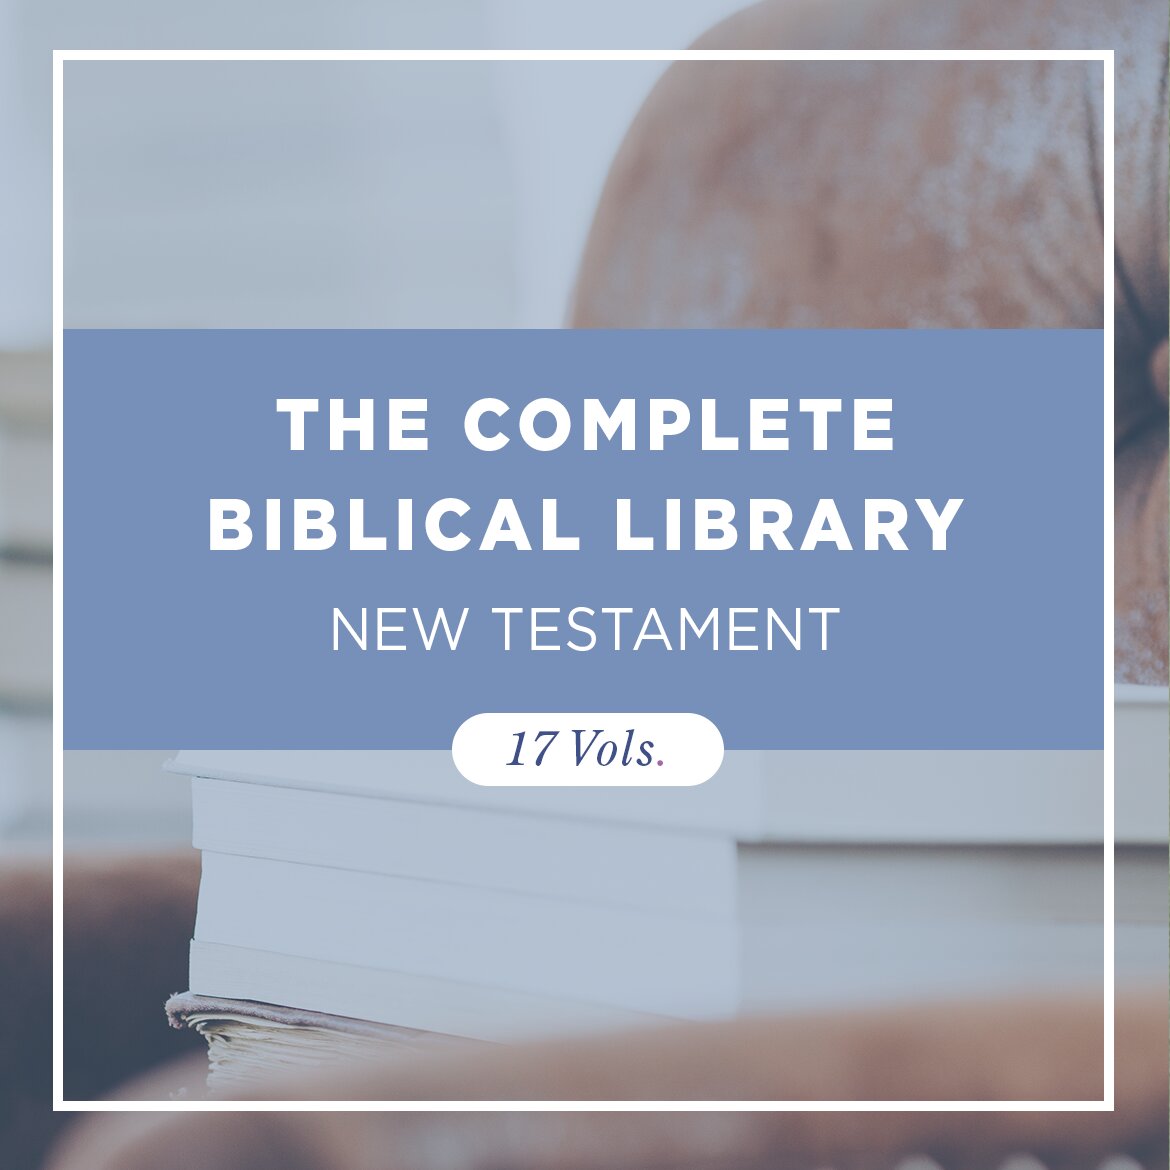 New Testament, 17 vols. (The Complete Biblical Library | CBL)